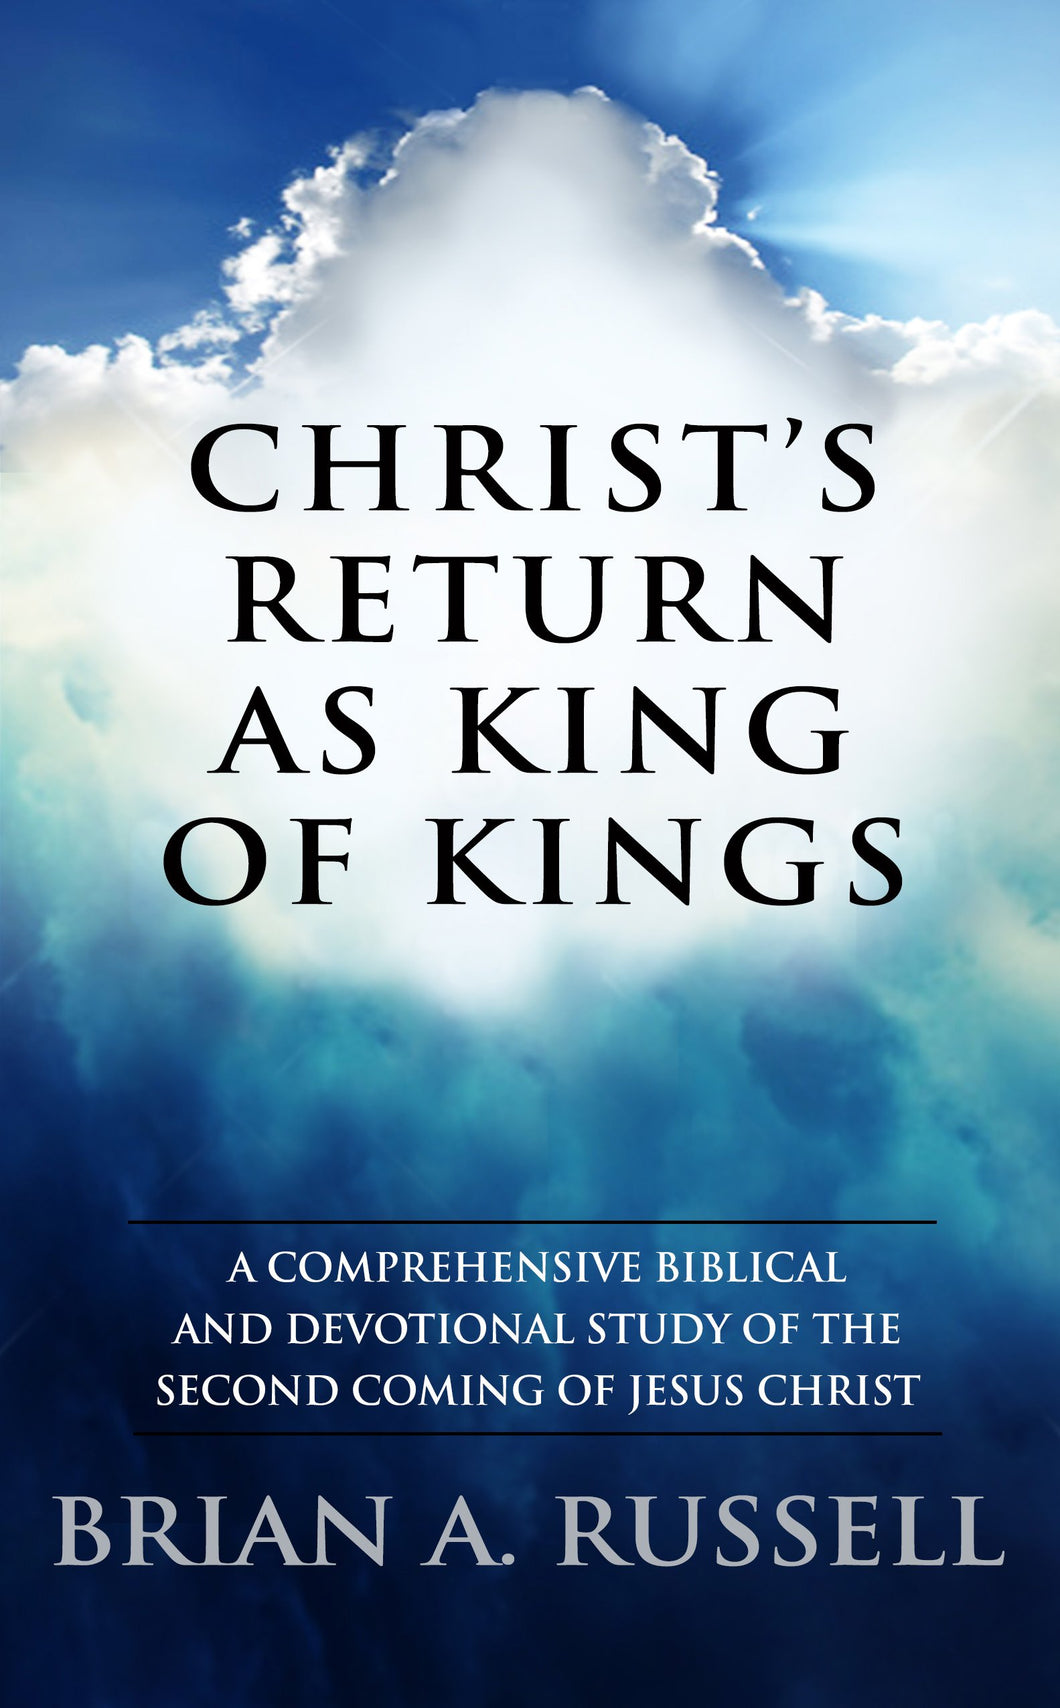 Christ's return as King of kings